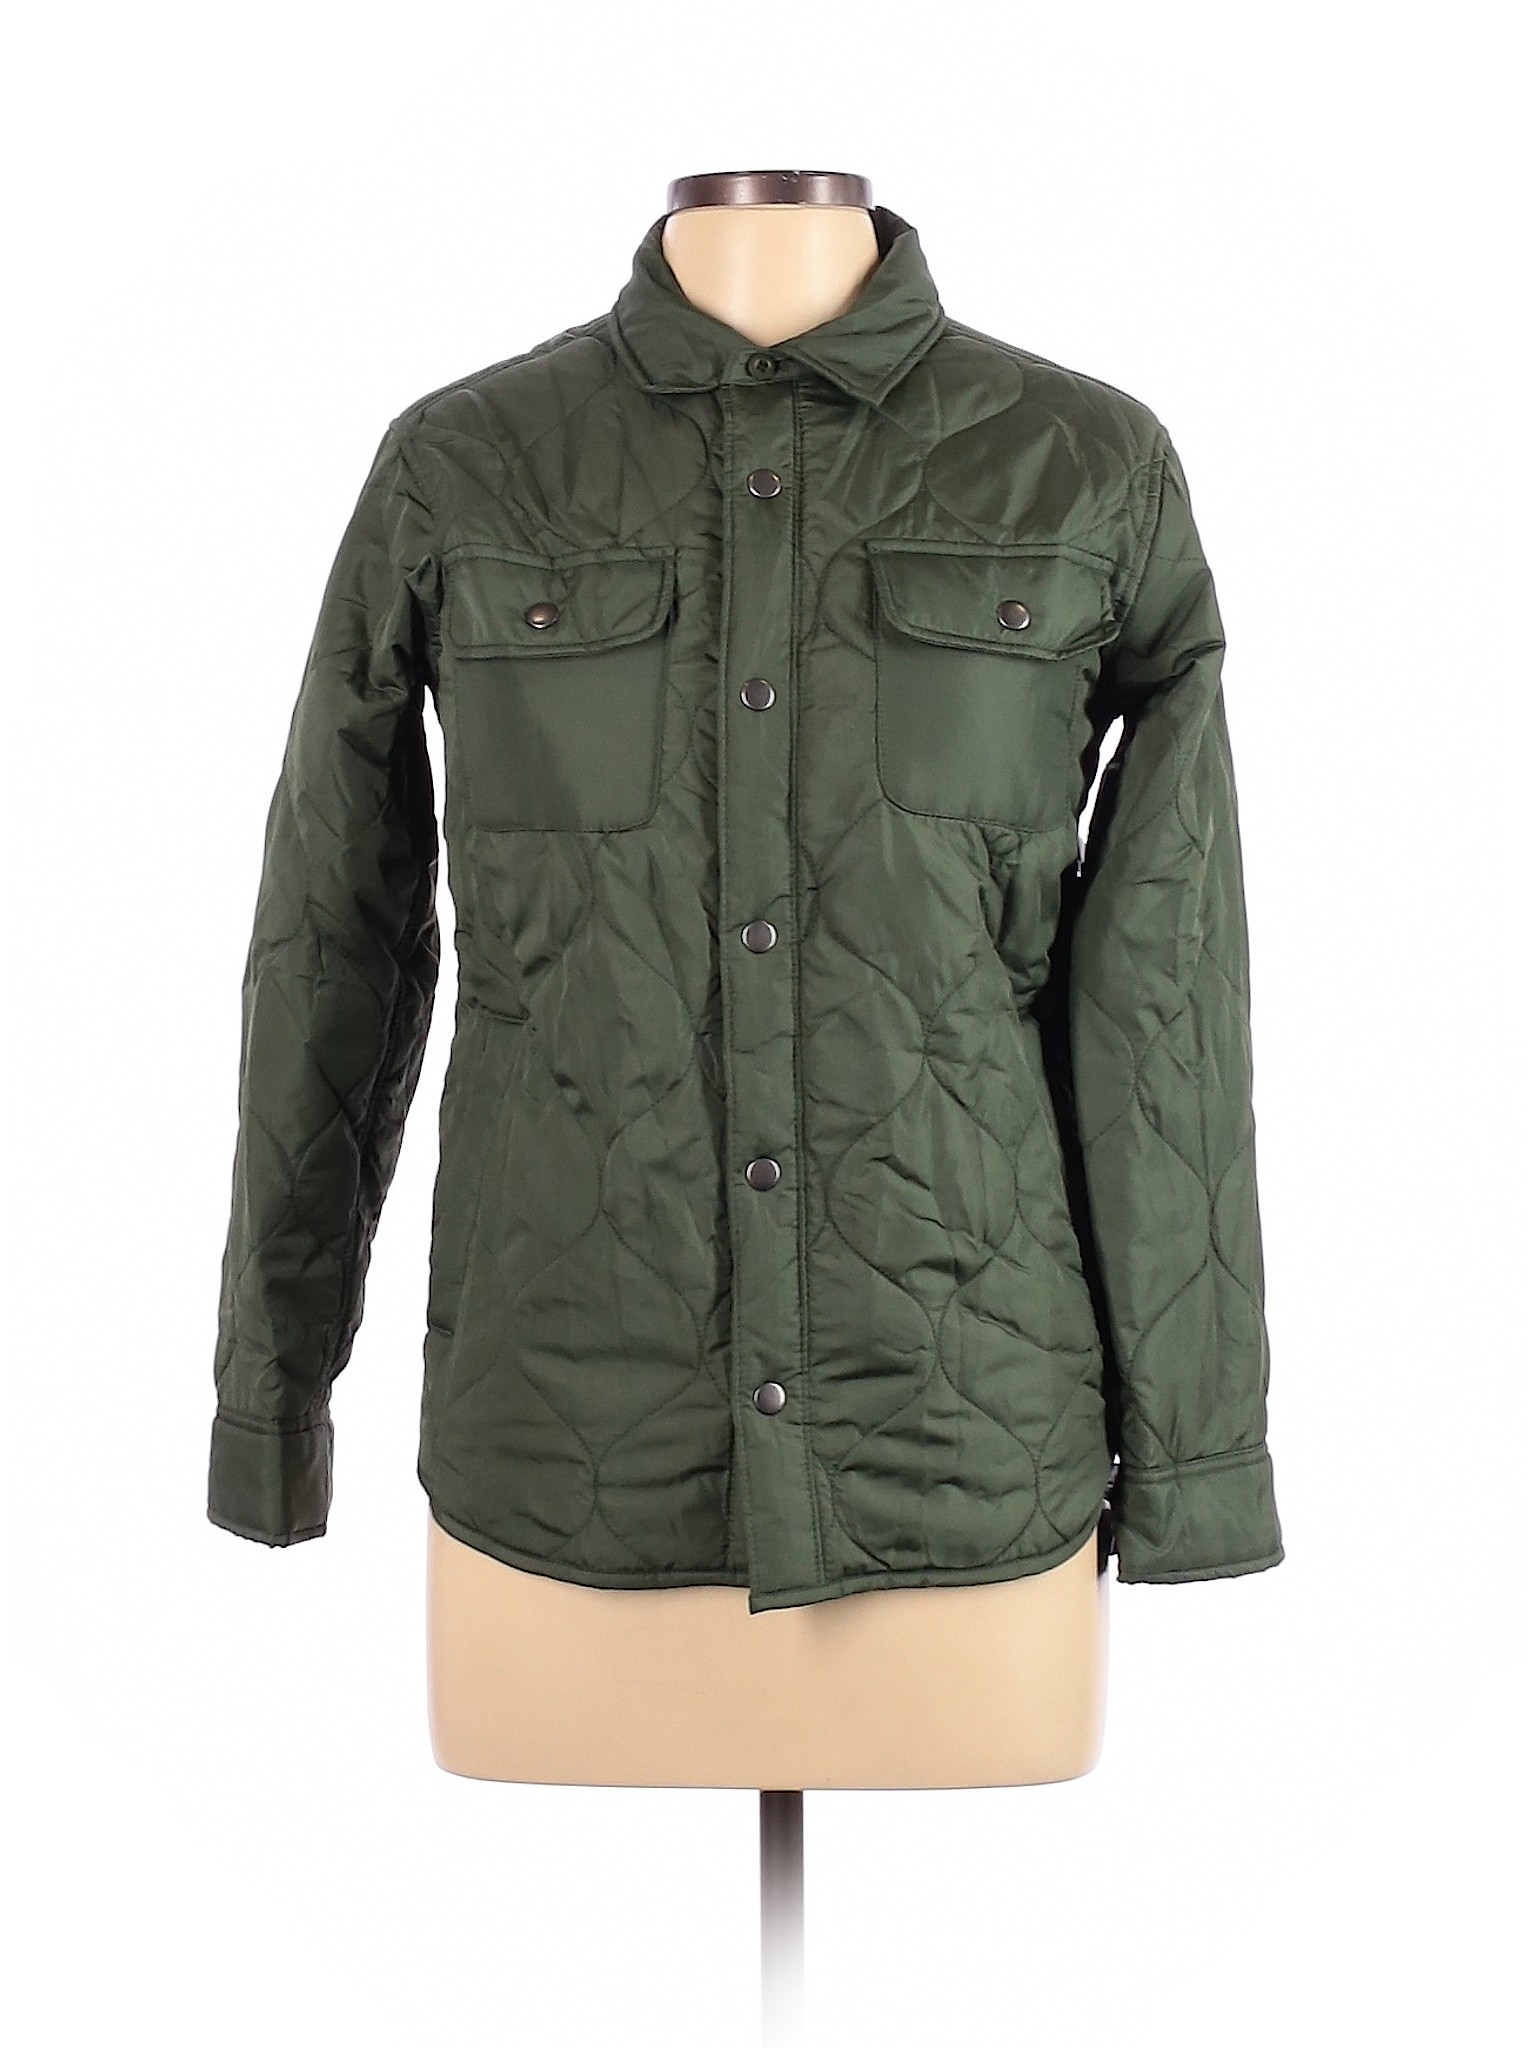 Old Navy Women Green Jacket XL | eBay